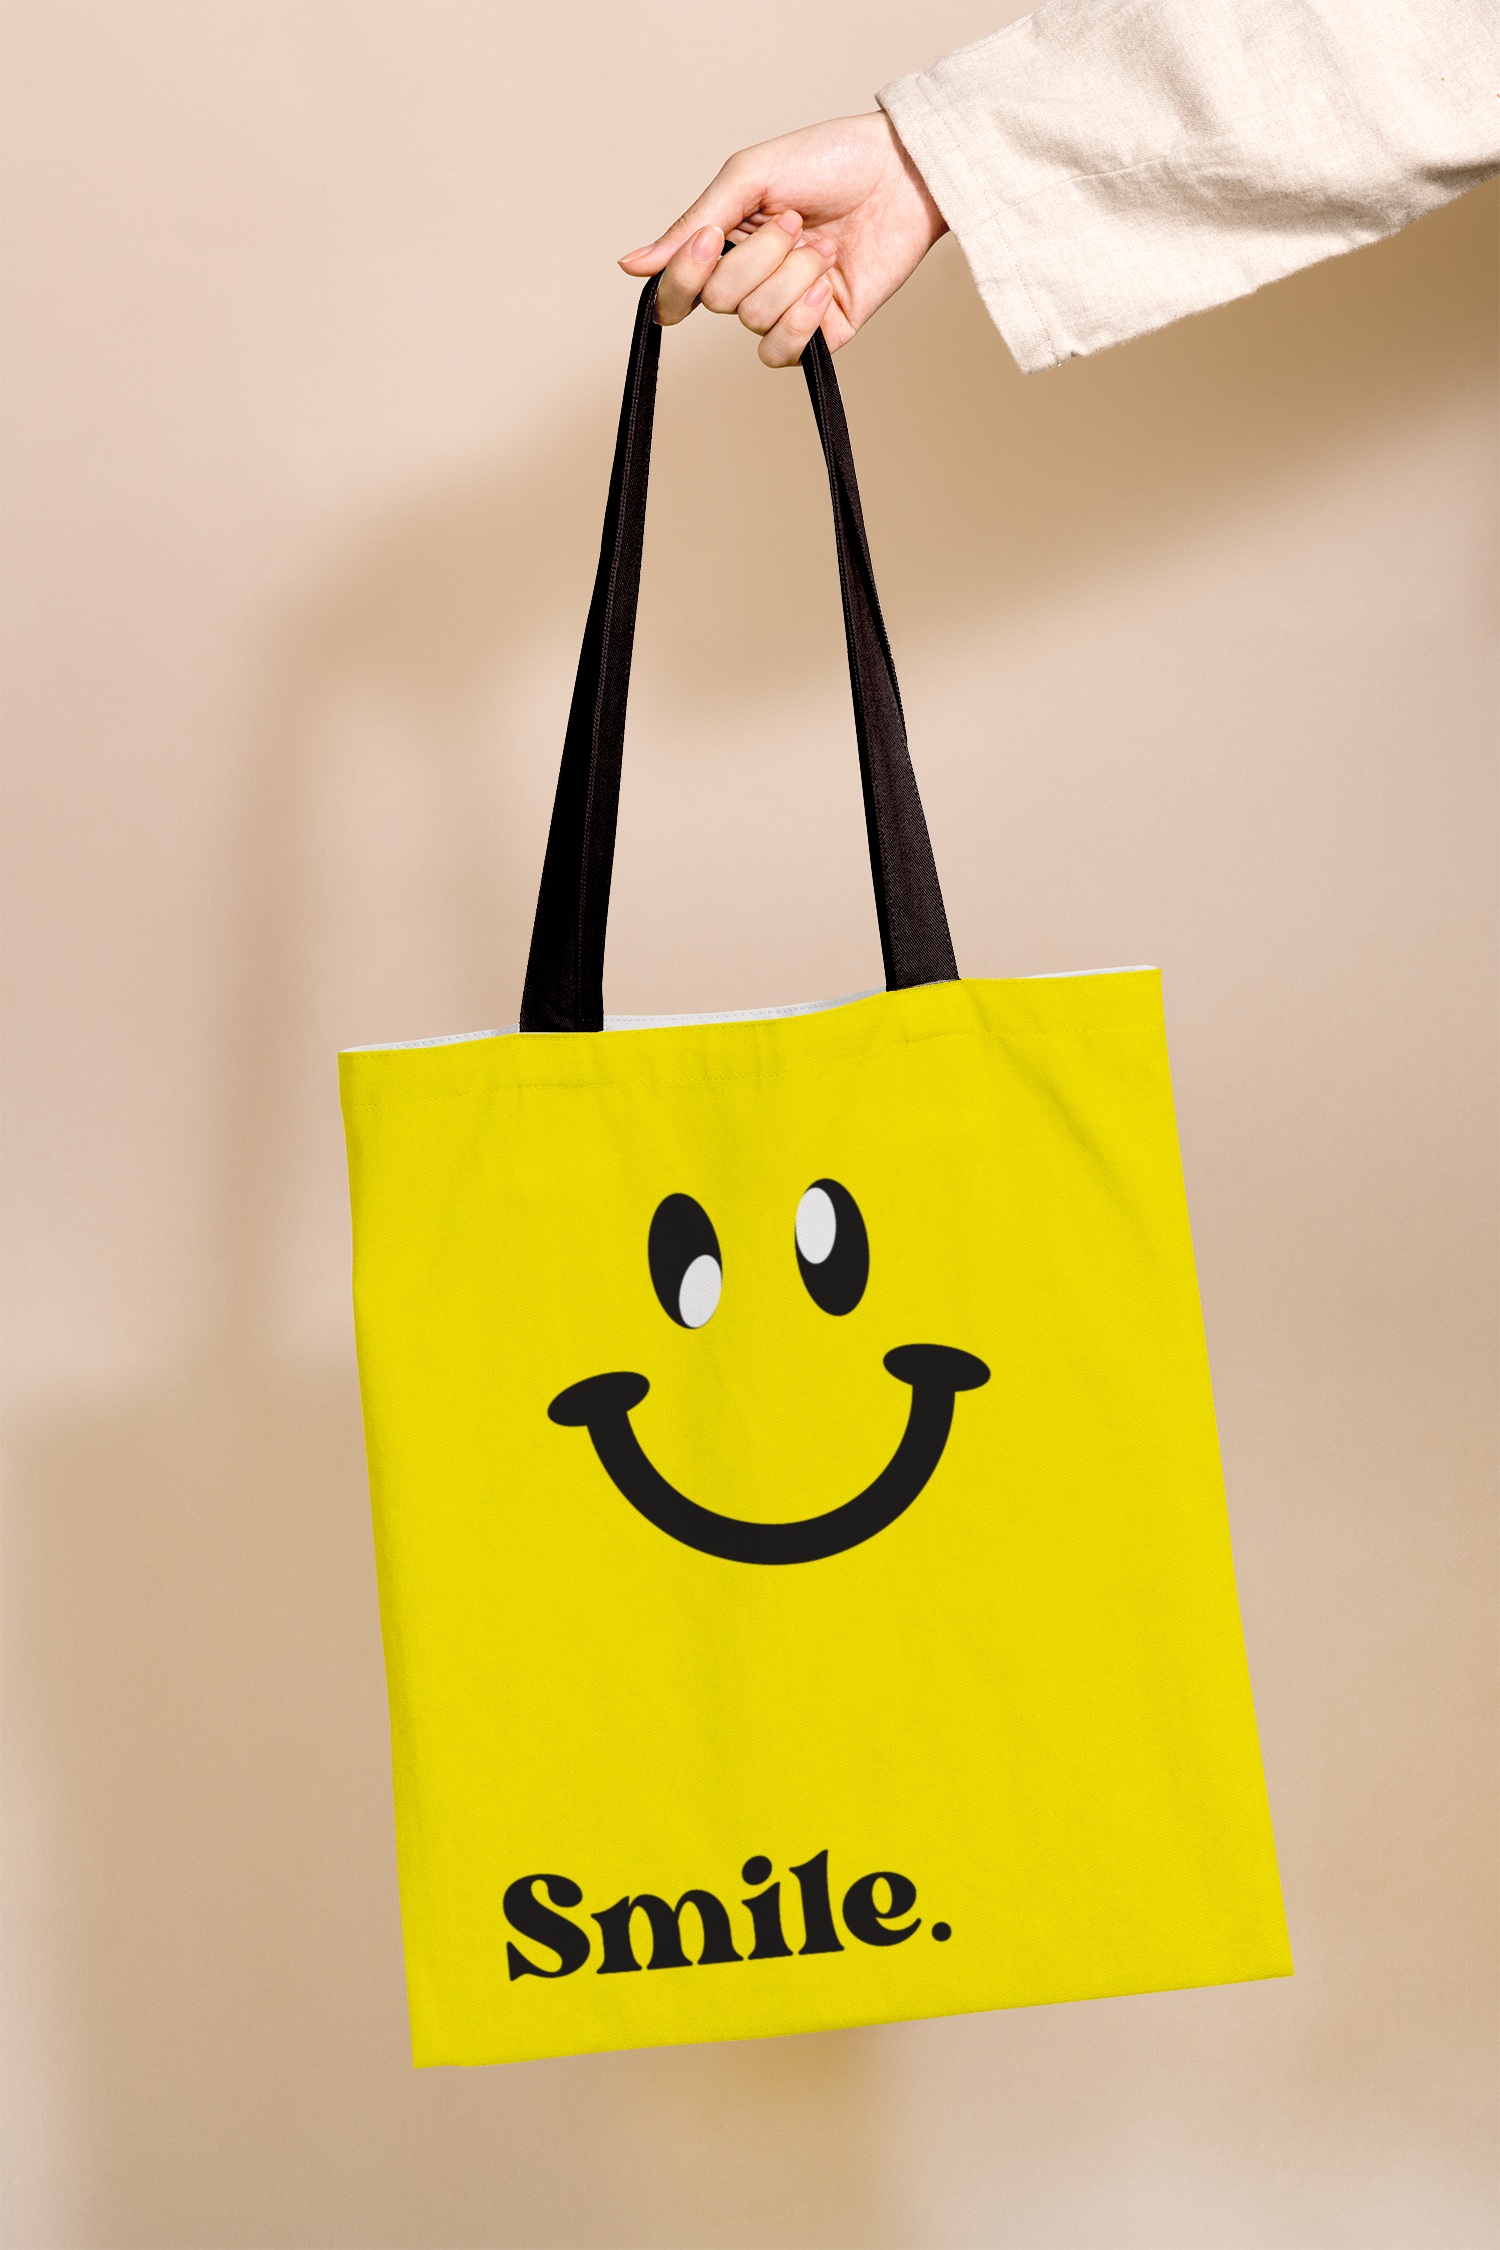 Smile Tote Bag